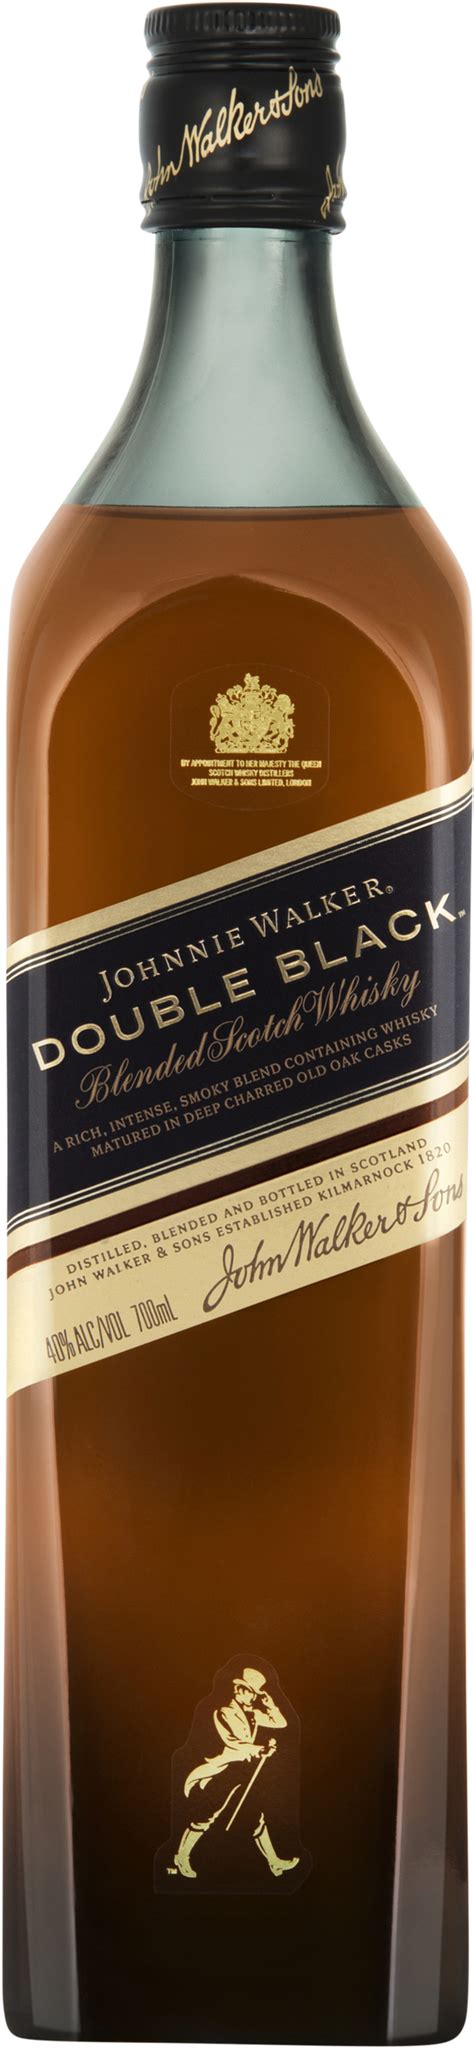 Buy Johnnie Walker Double Black Scotch Whisky 700ml Online